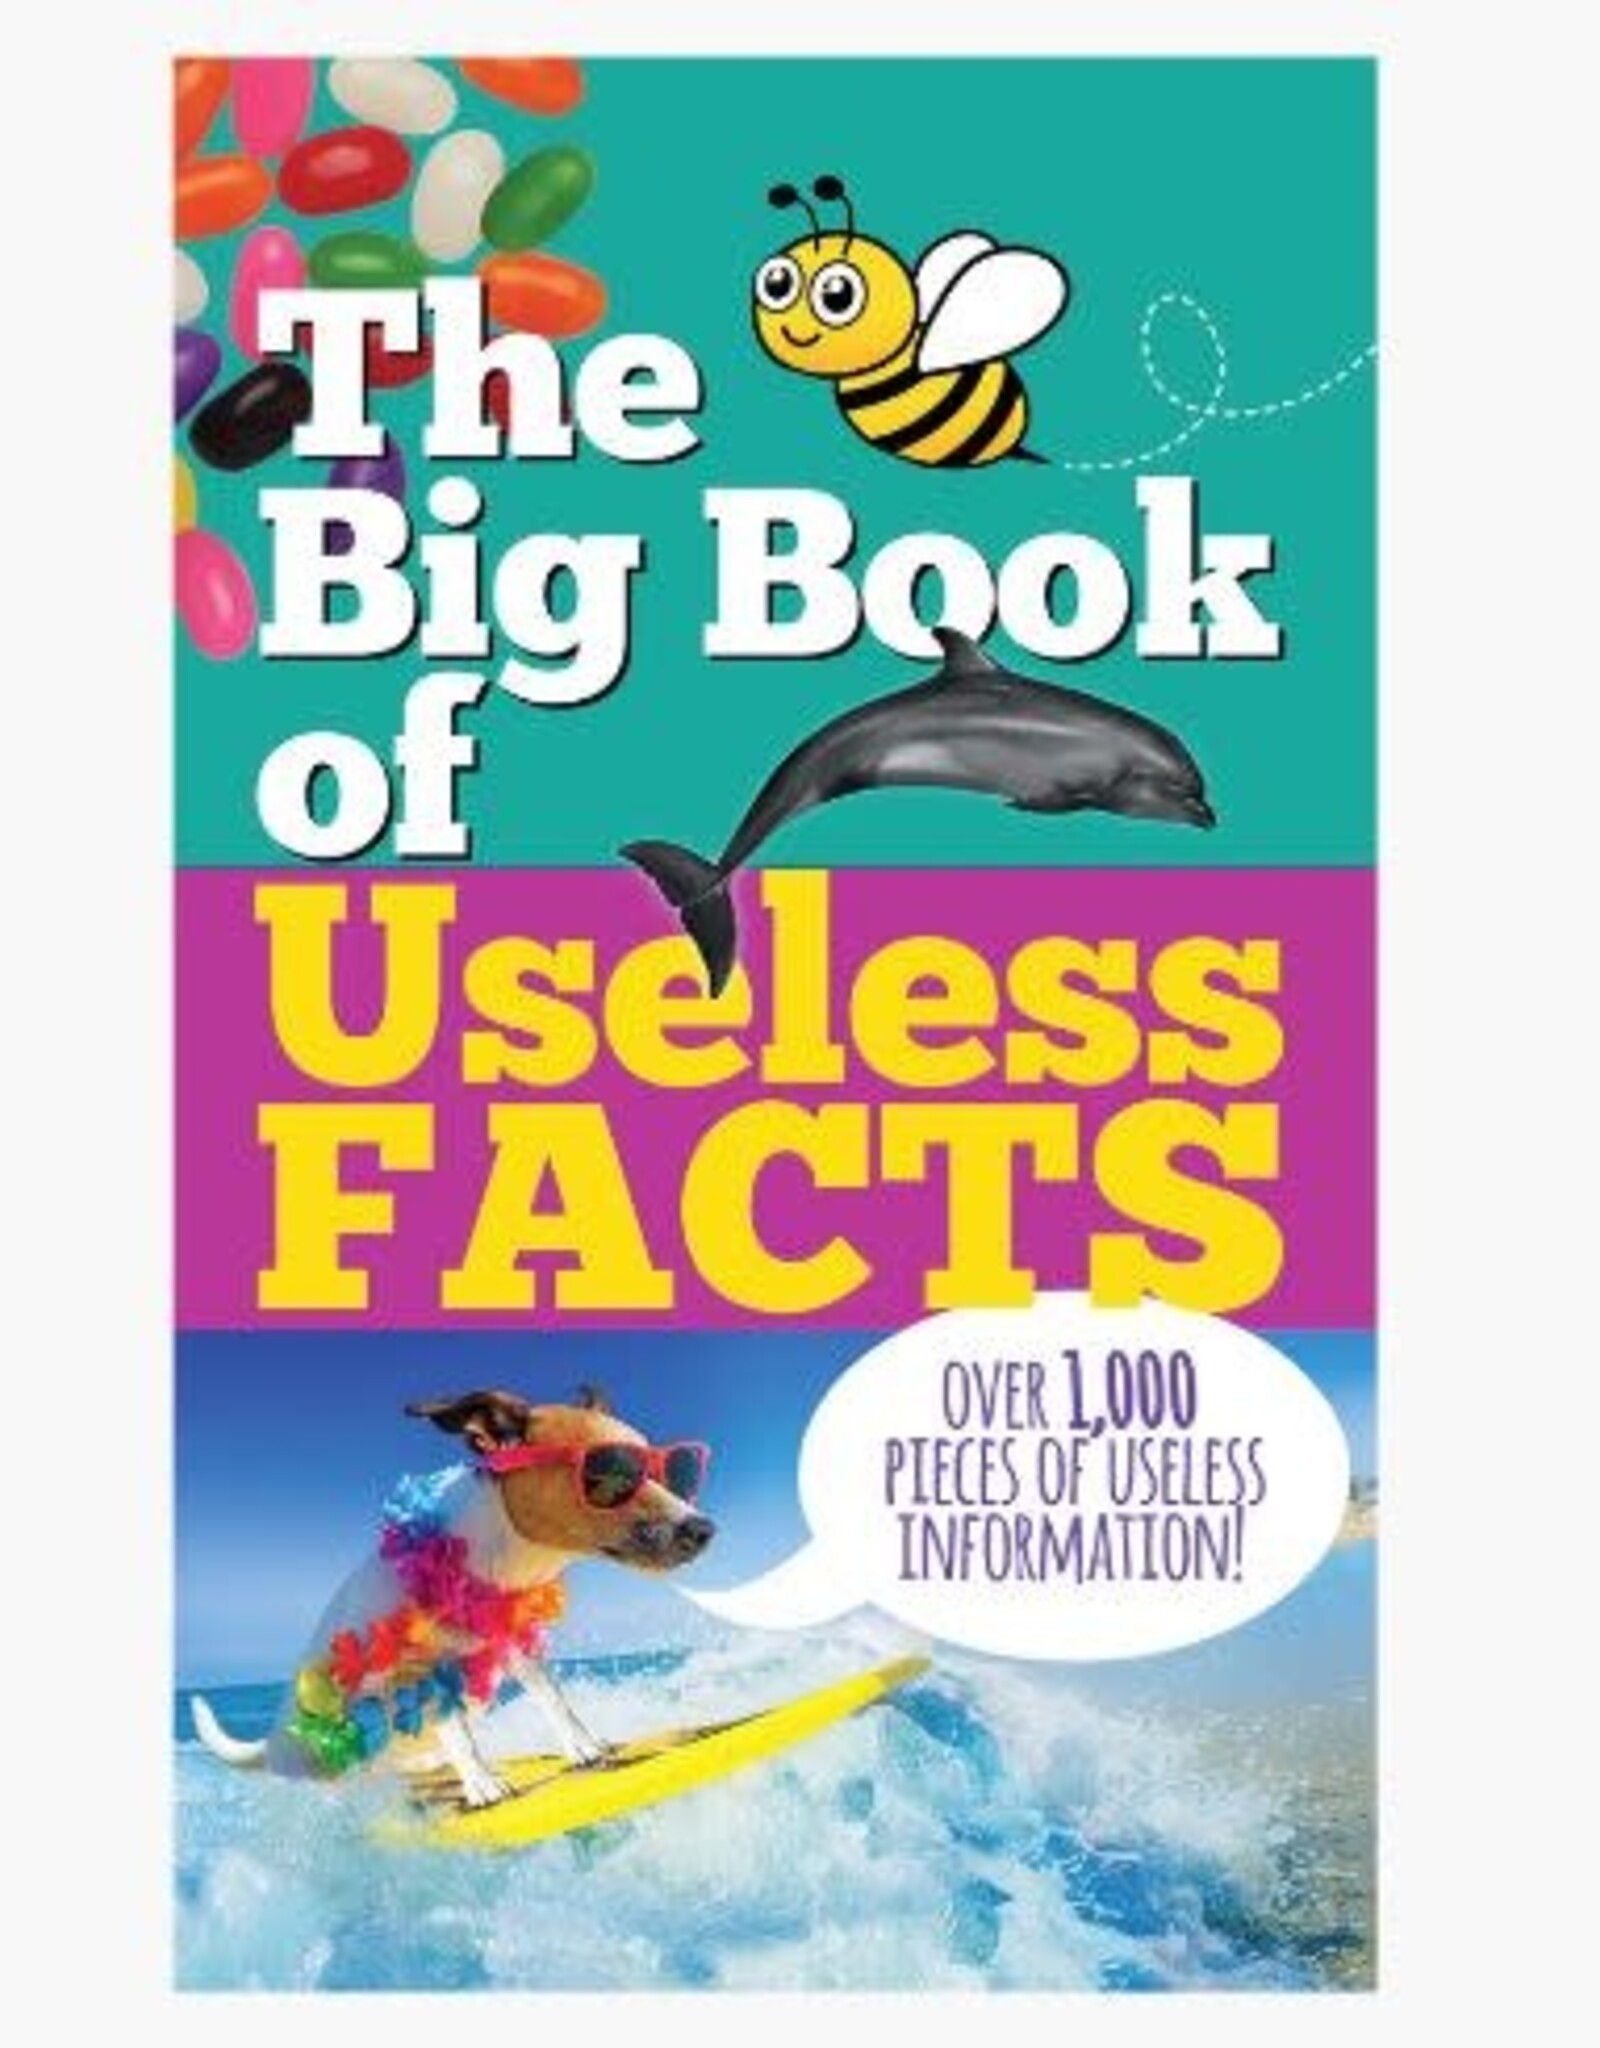 Peter Pauper Press THE BIG BOOK OF USELESS FACTS